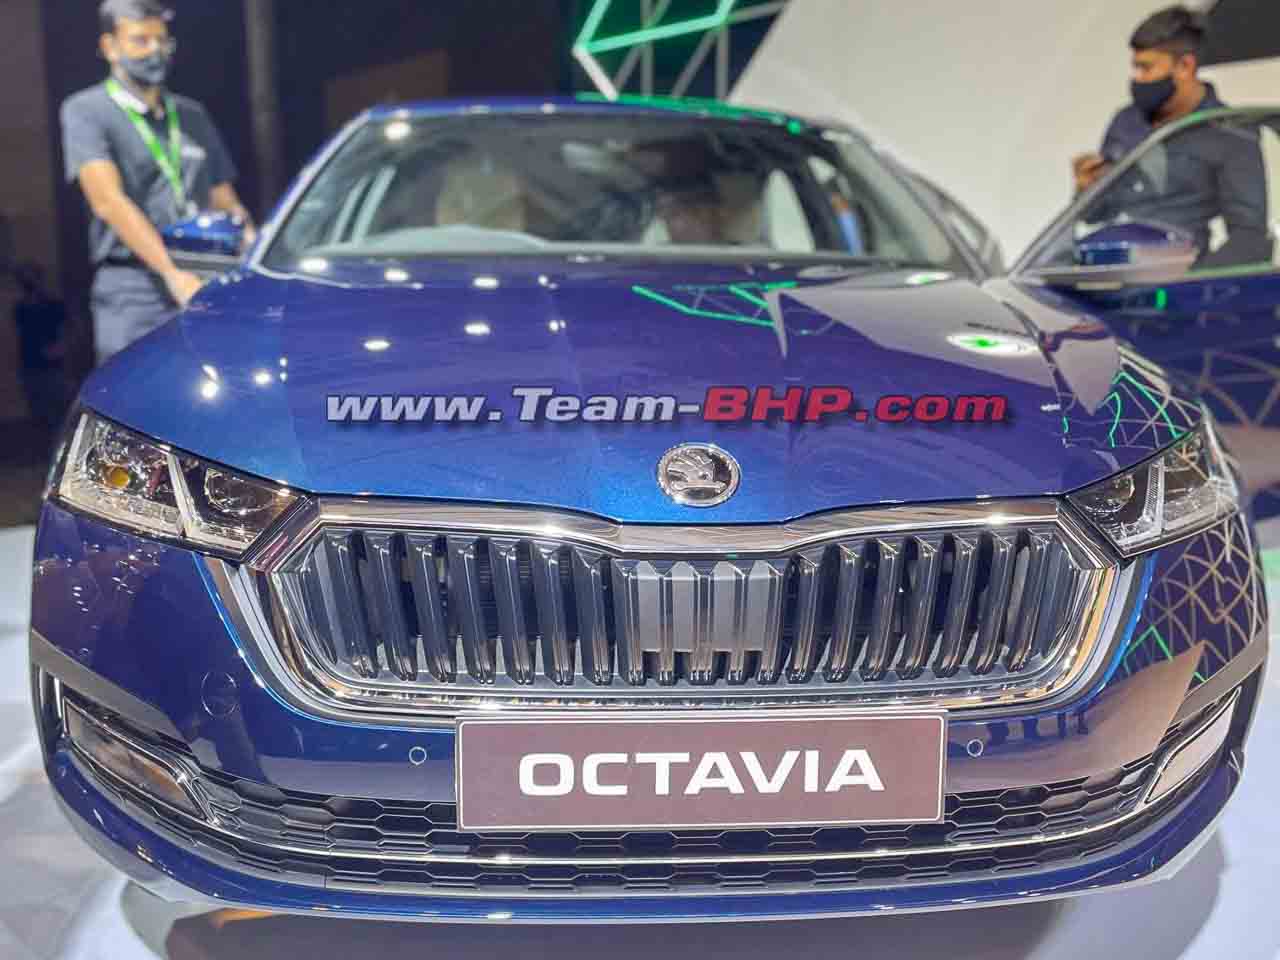 2021 Skoda Octavia L&K Top Variant Showcased To Dealers ...